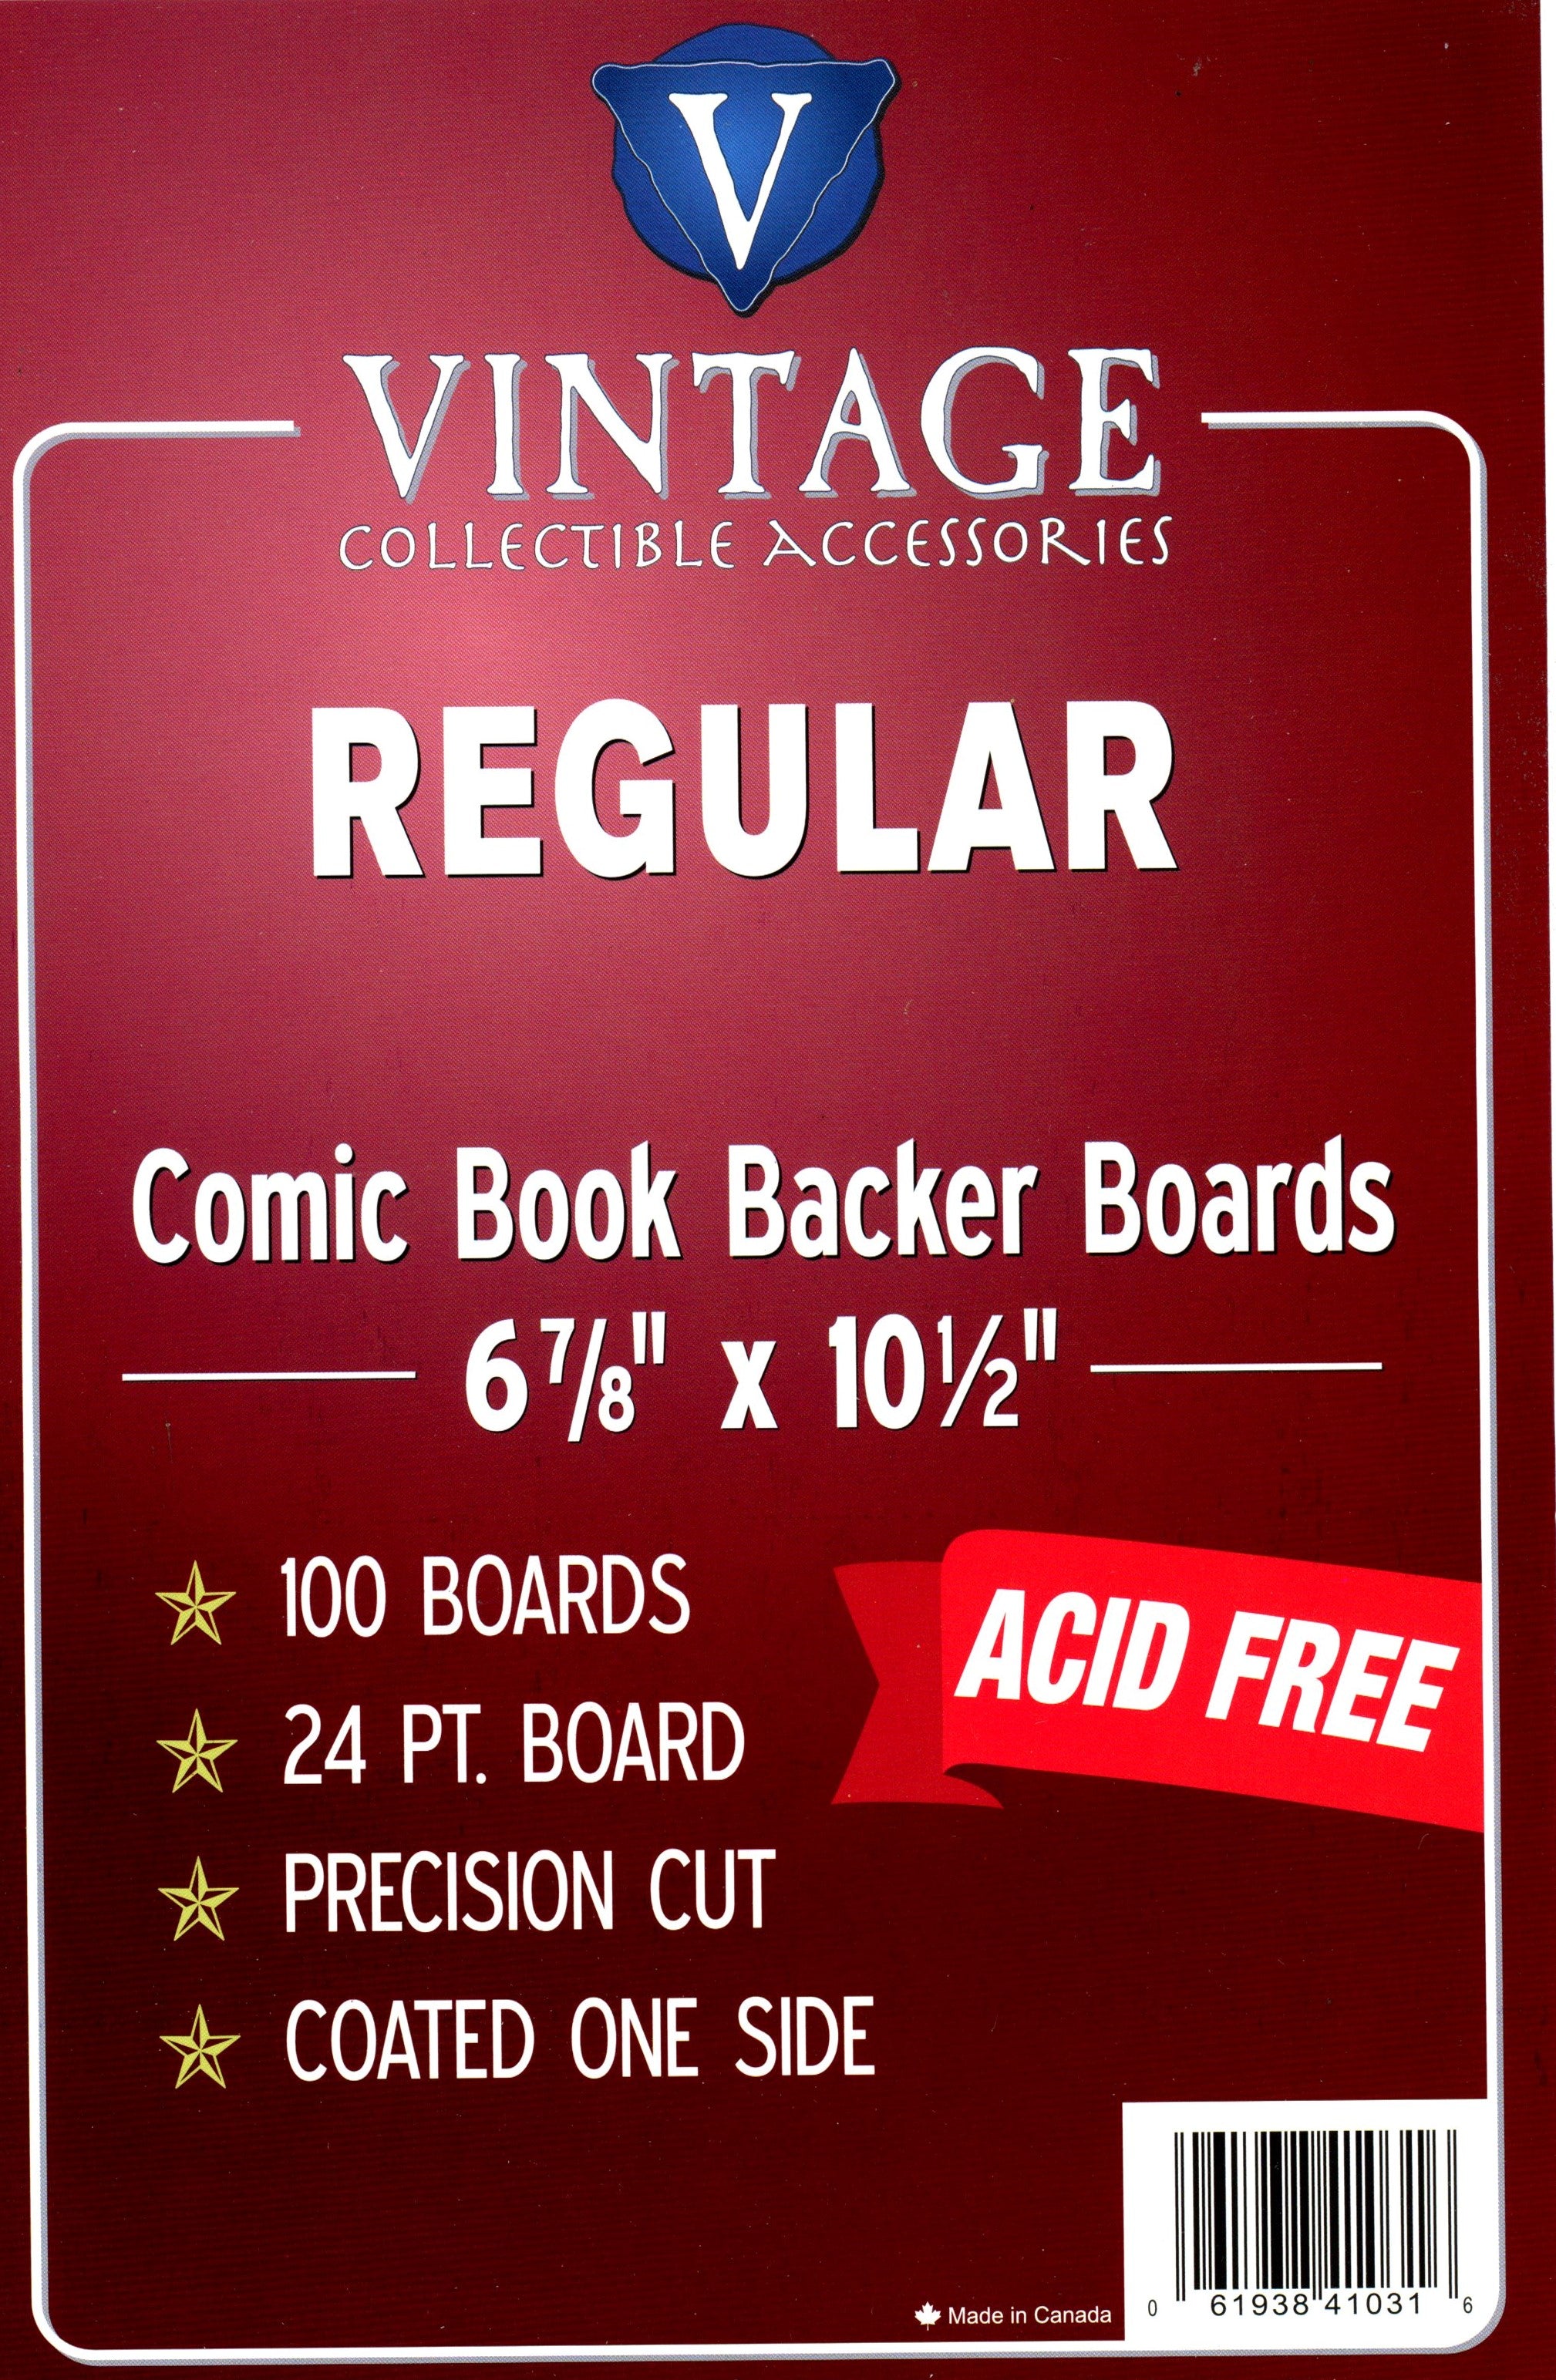 Comic Pro Line's Vintage Collectibles Brand Regular 6 7/8